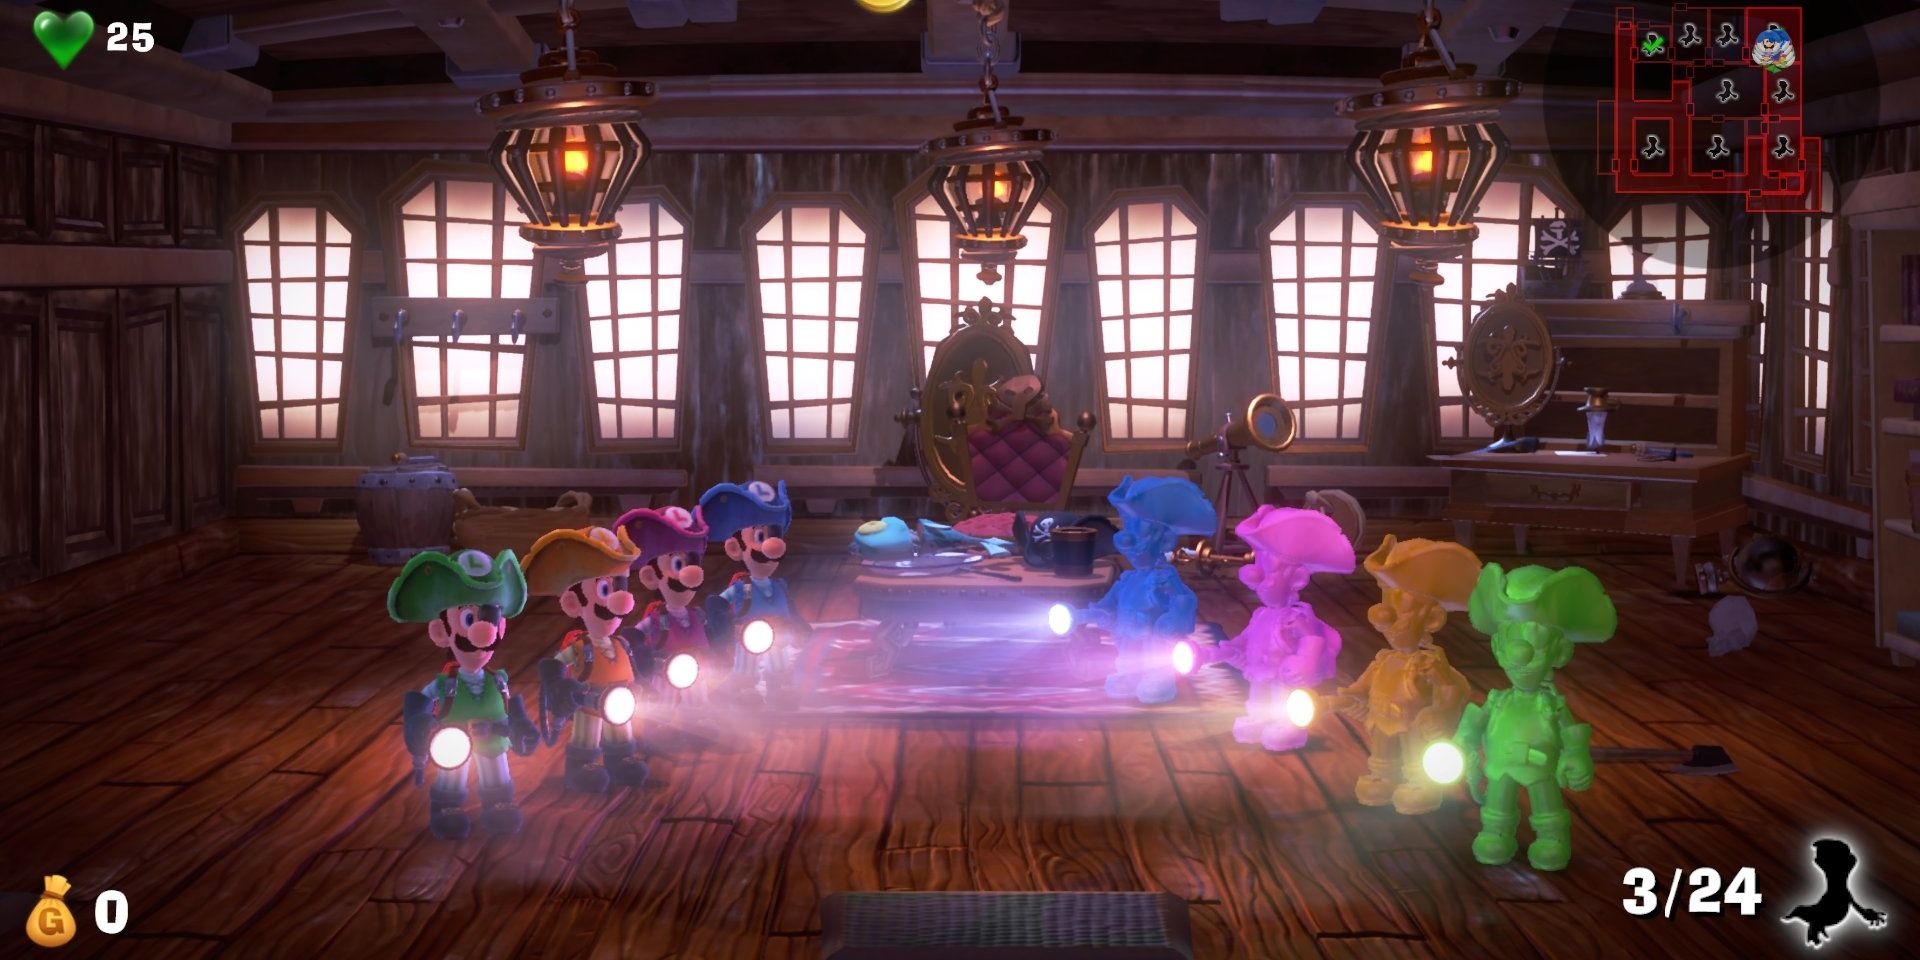 Four players and their Gooigis in Luigi's Mansion 3 ScareScraper mode